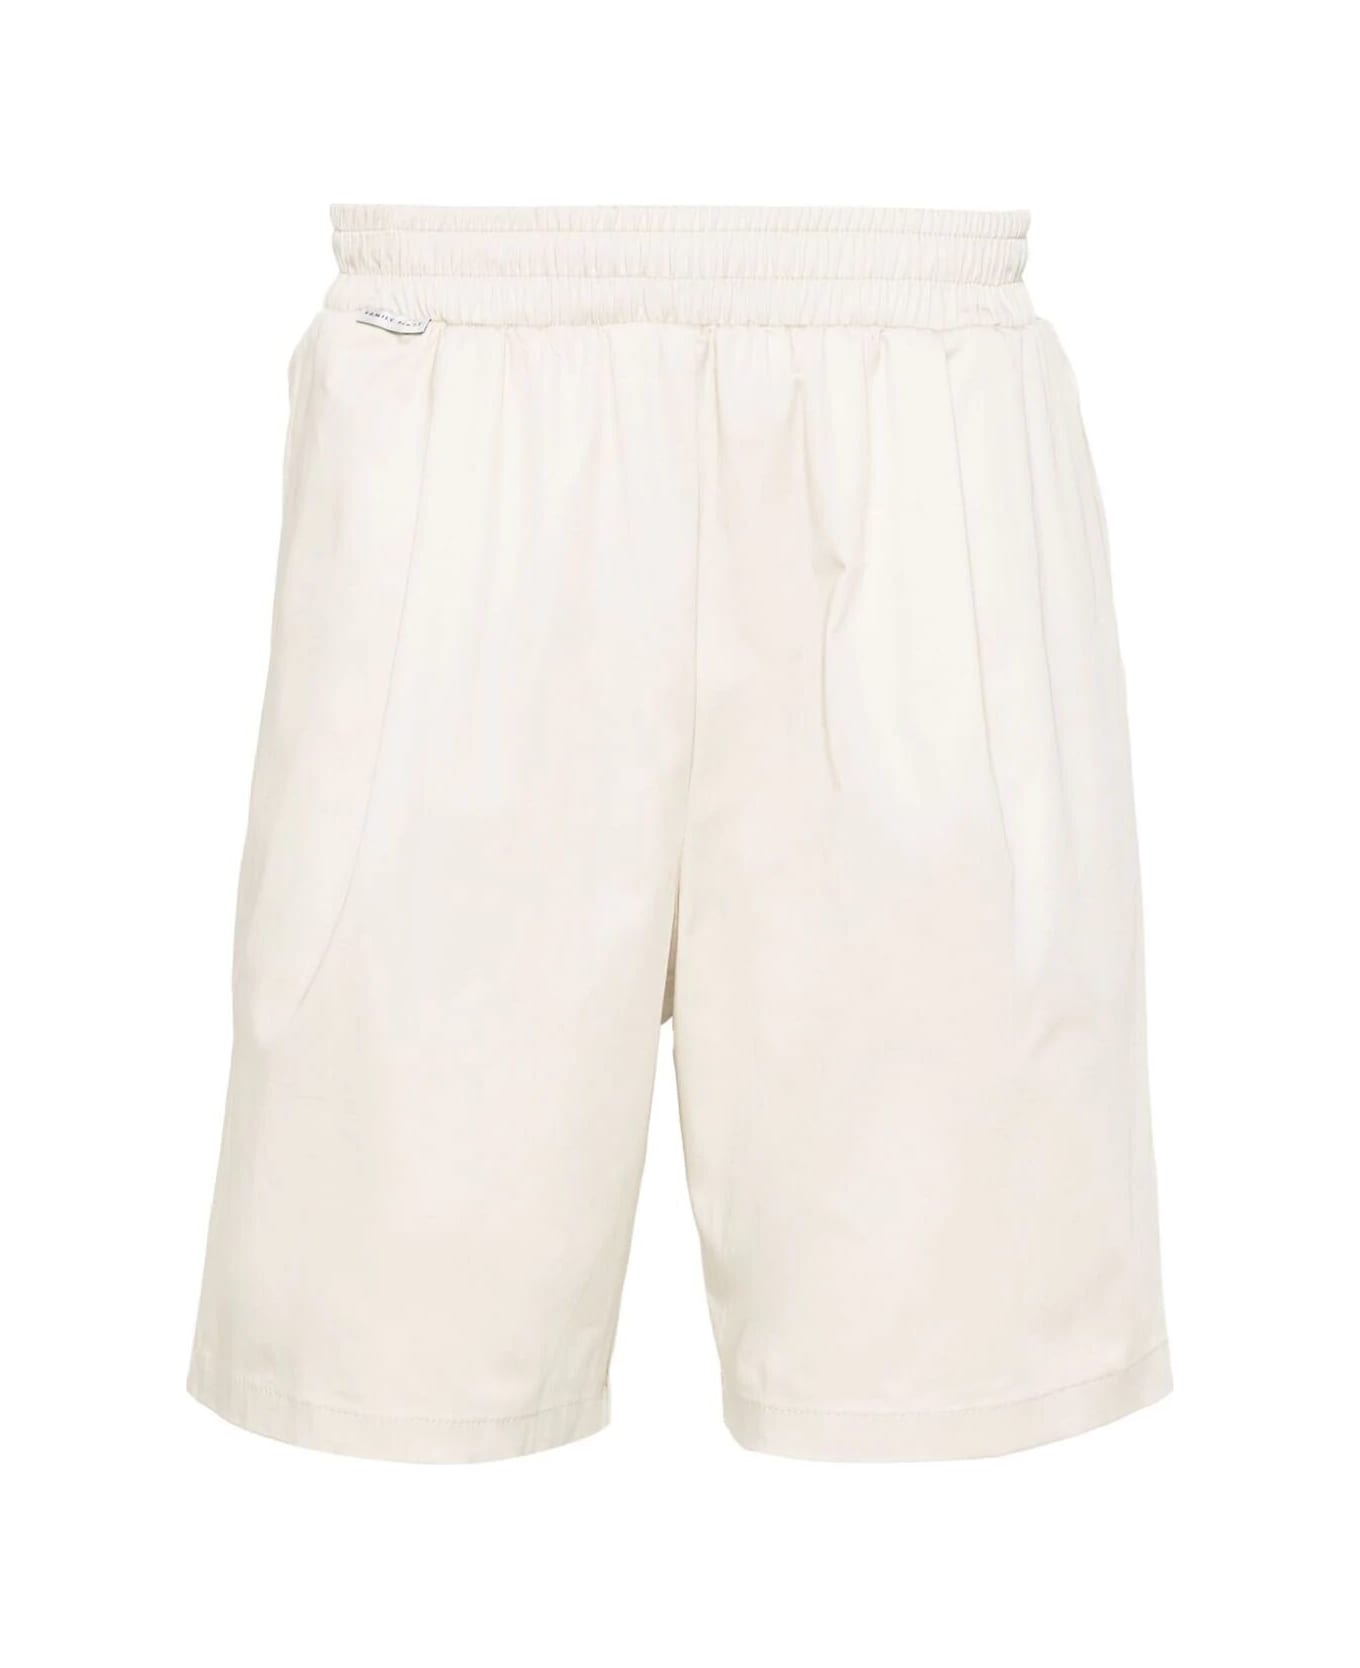 Family First Milano Chino Shorts - White